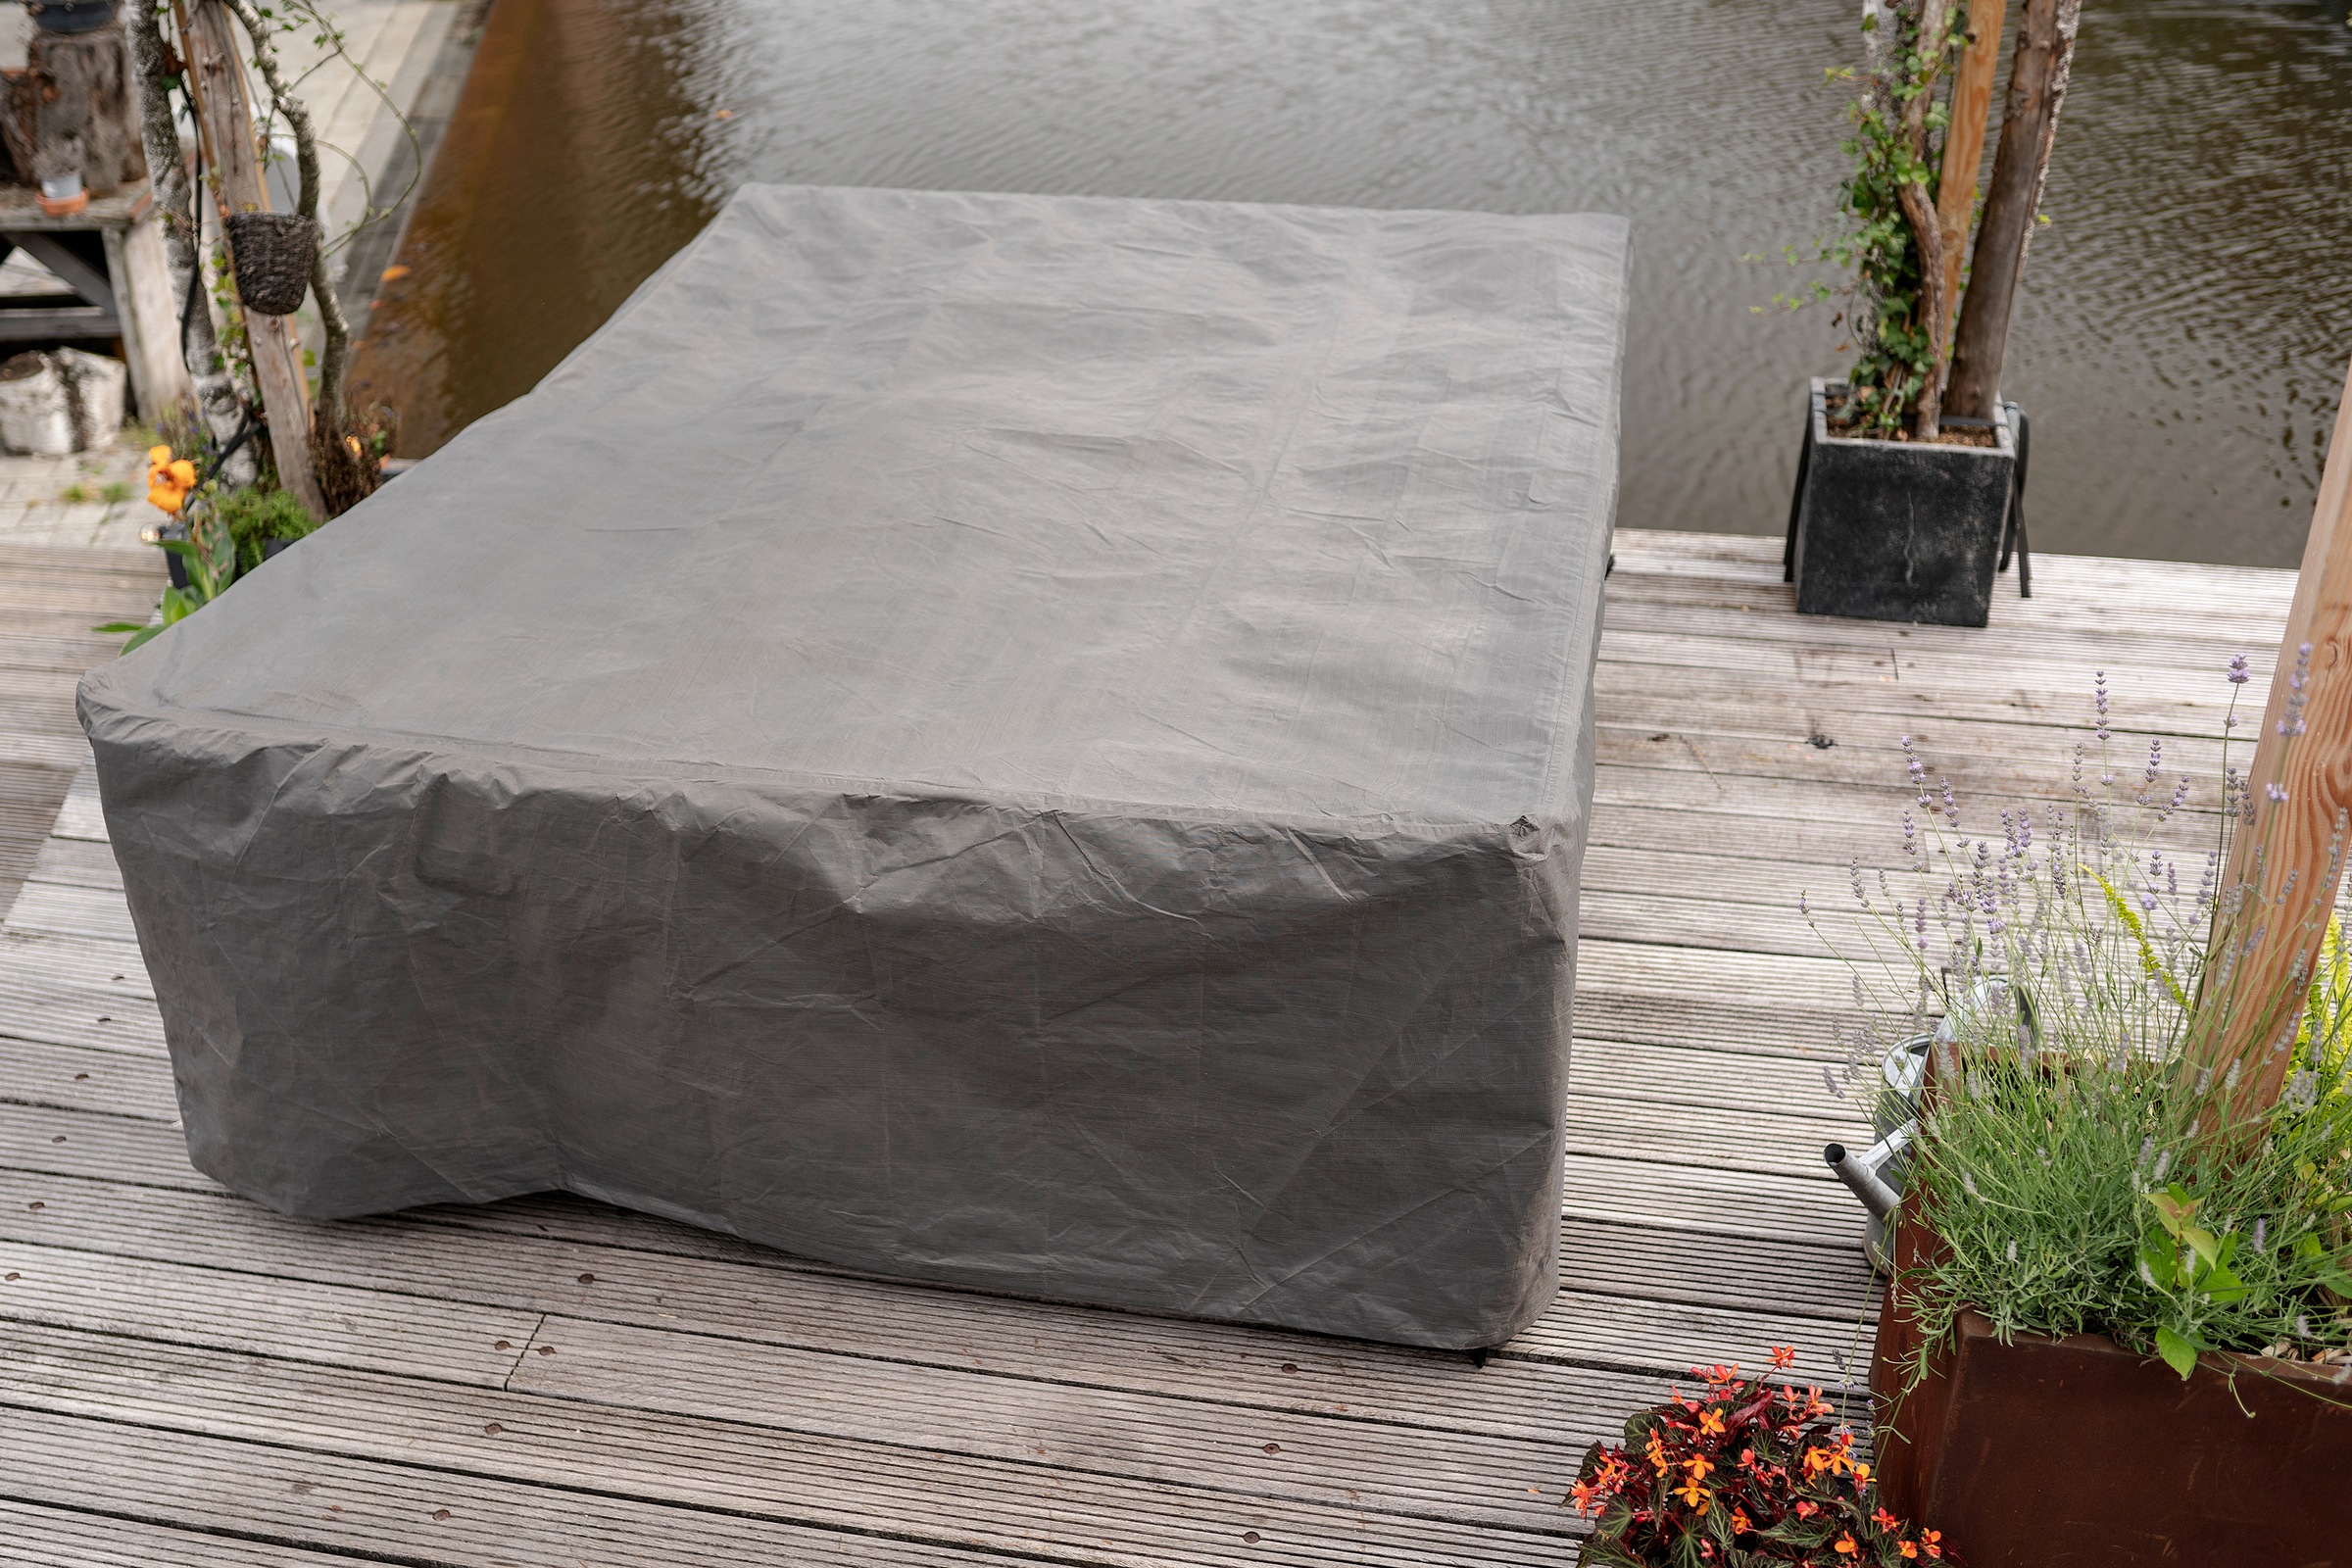 winza outdoor covers Gartenmöbel-Schutzhülle, geeignet für Loungeset, 280x230x80 cm